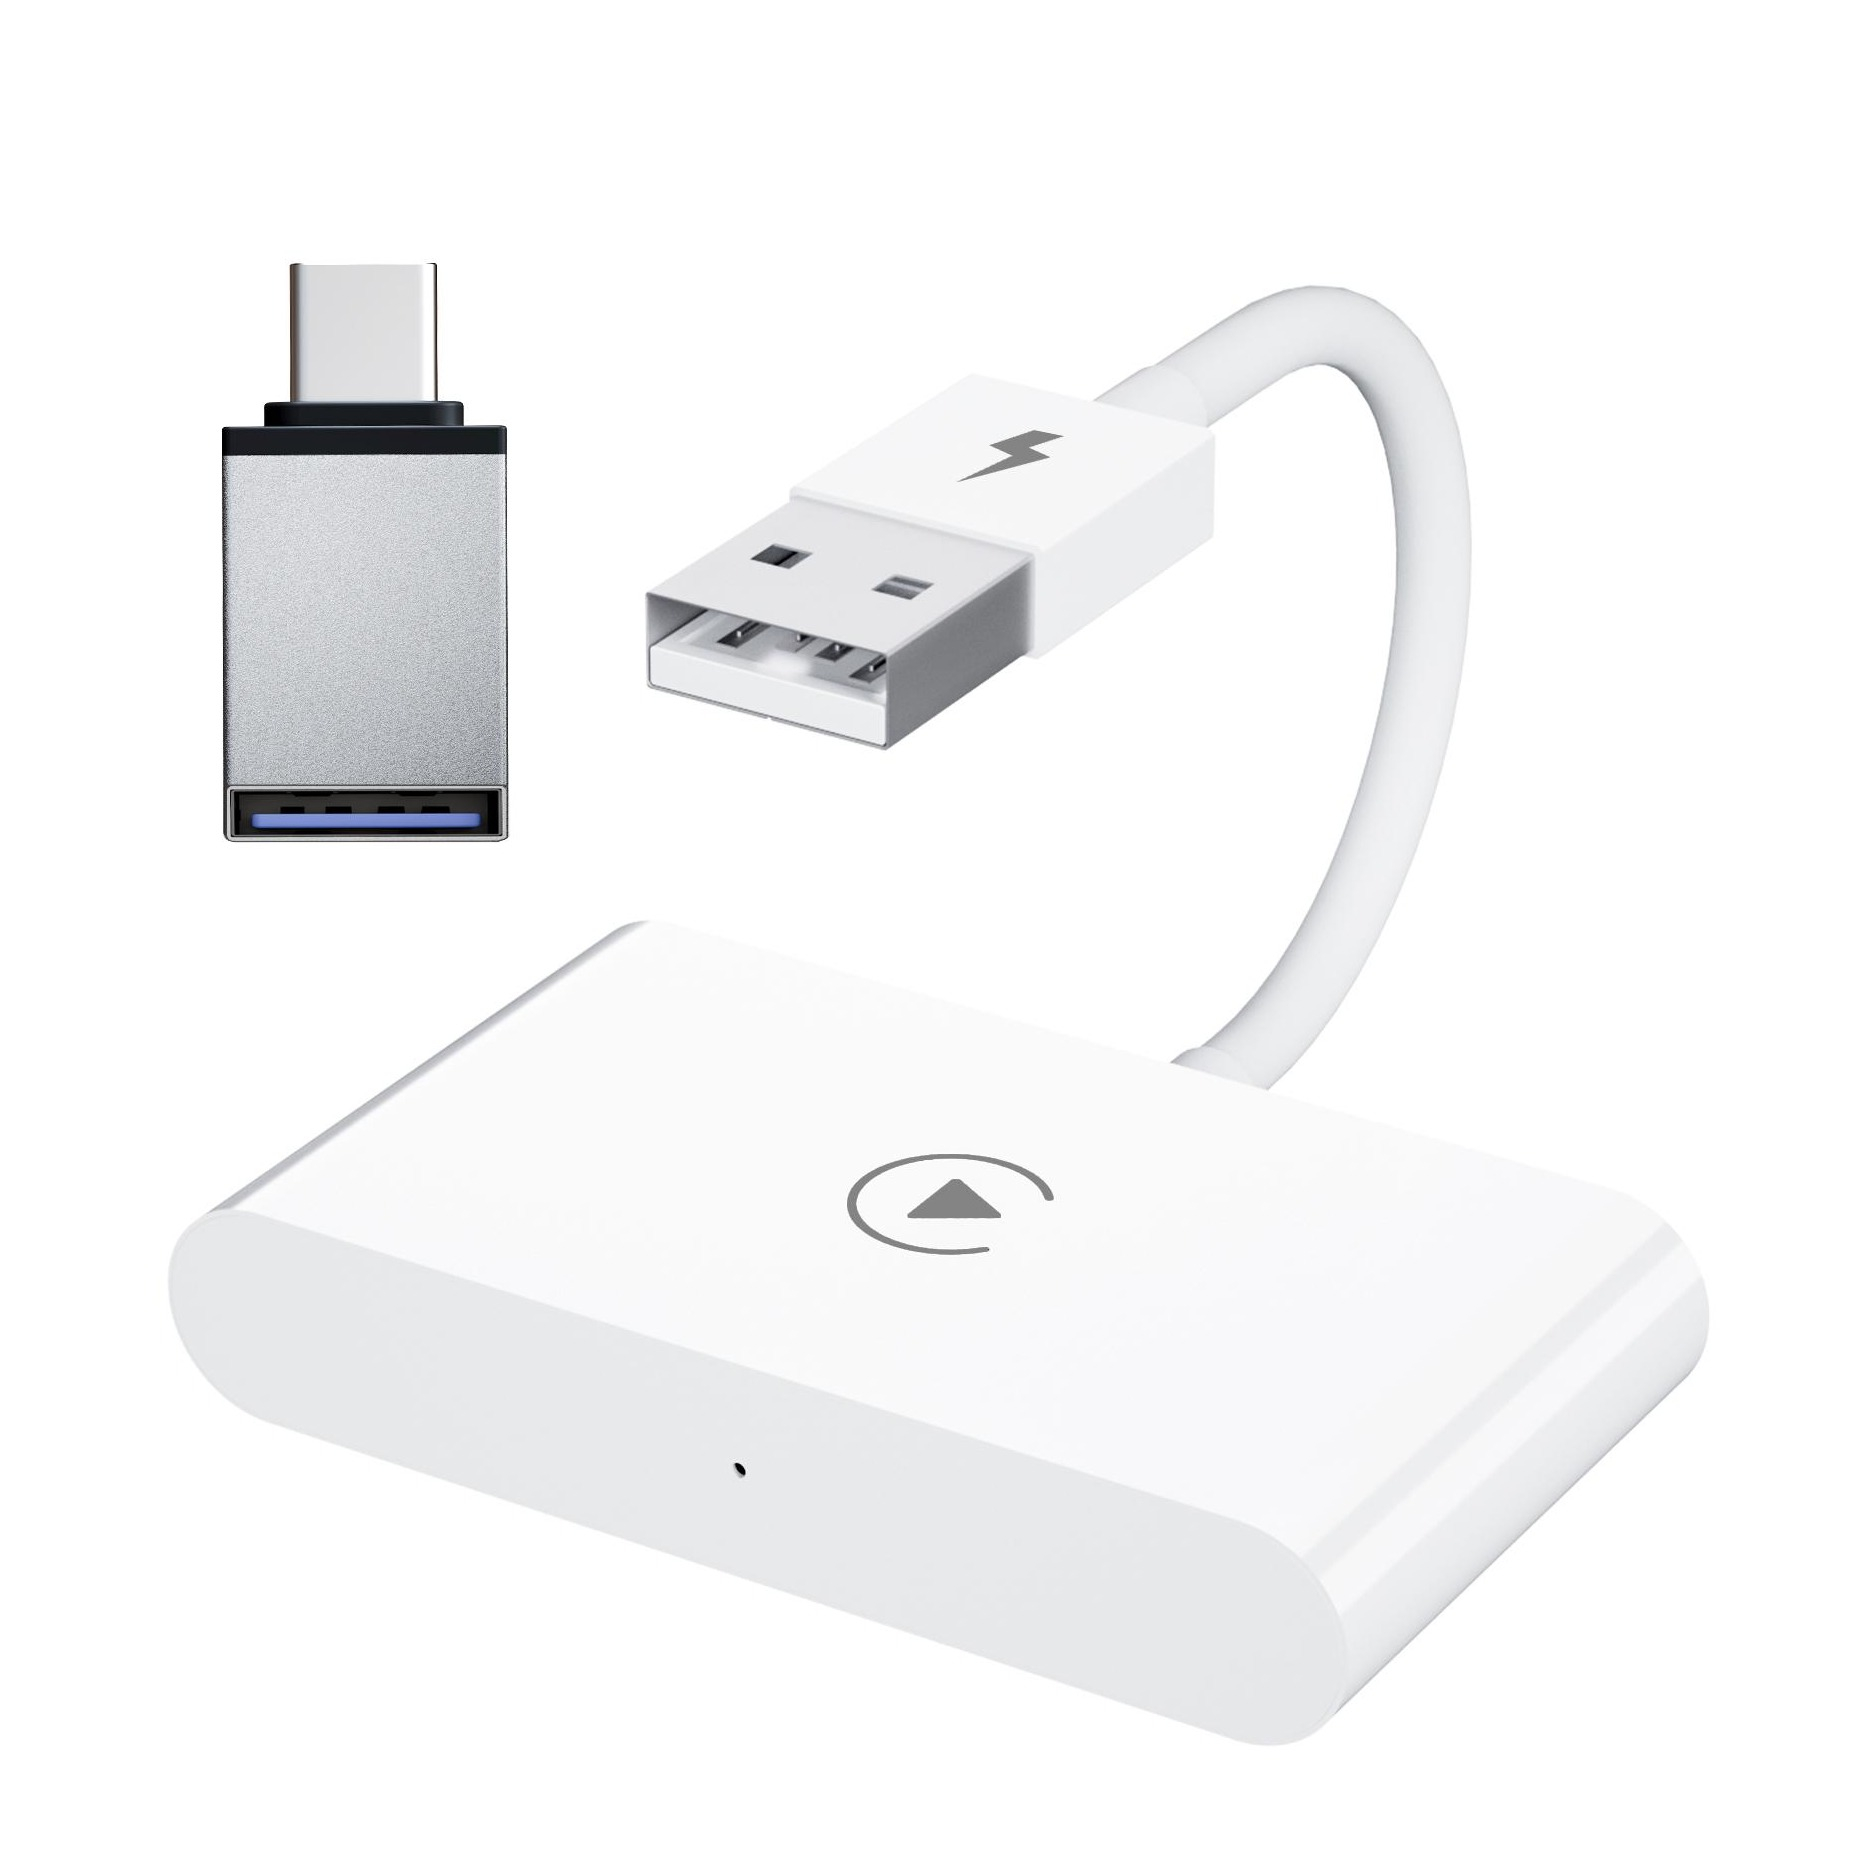 Adapter für Handy Smartphone MacBook PC TV